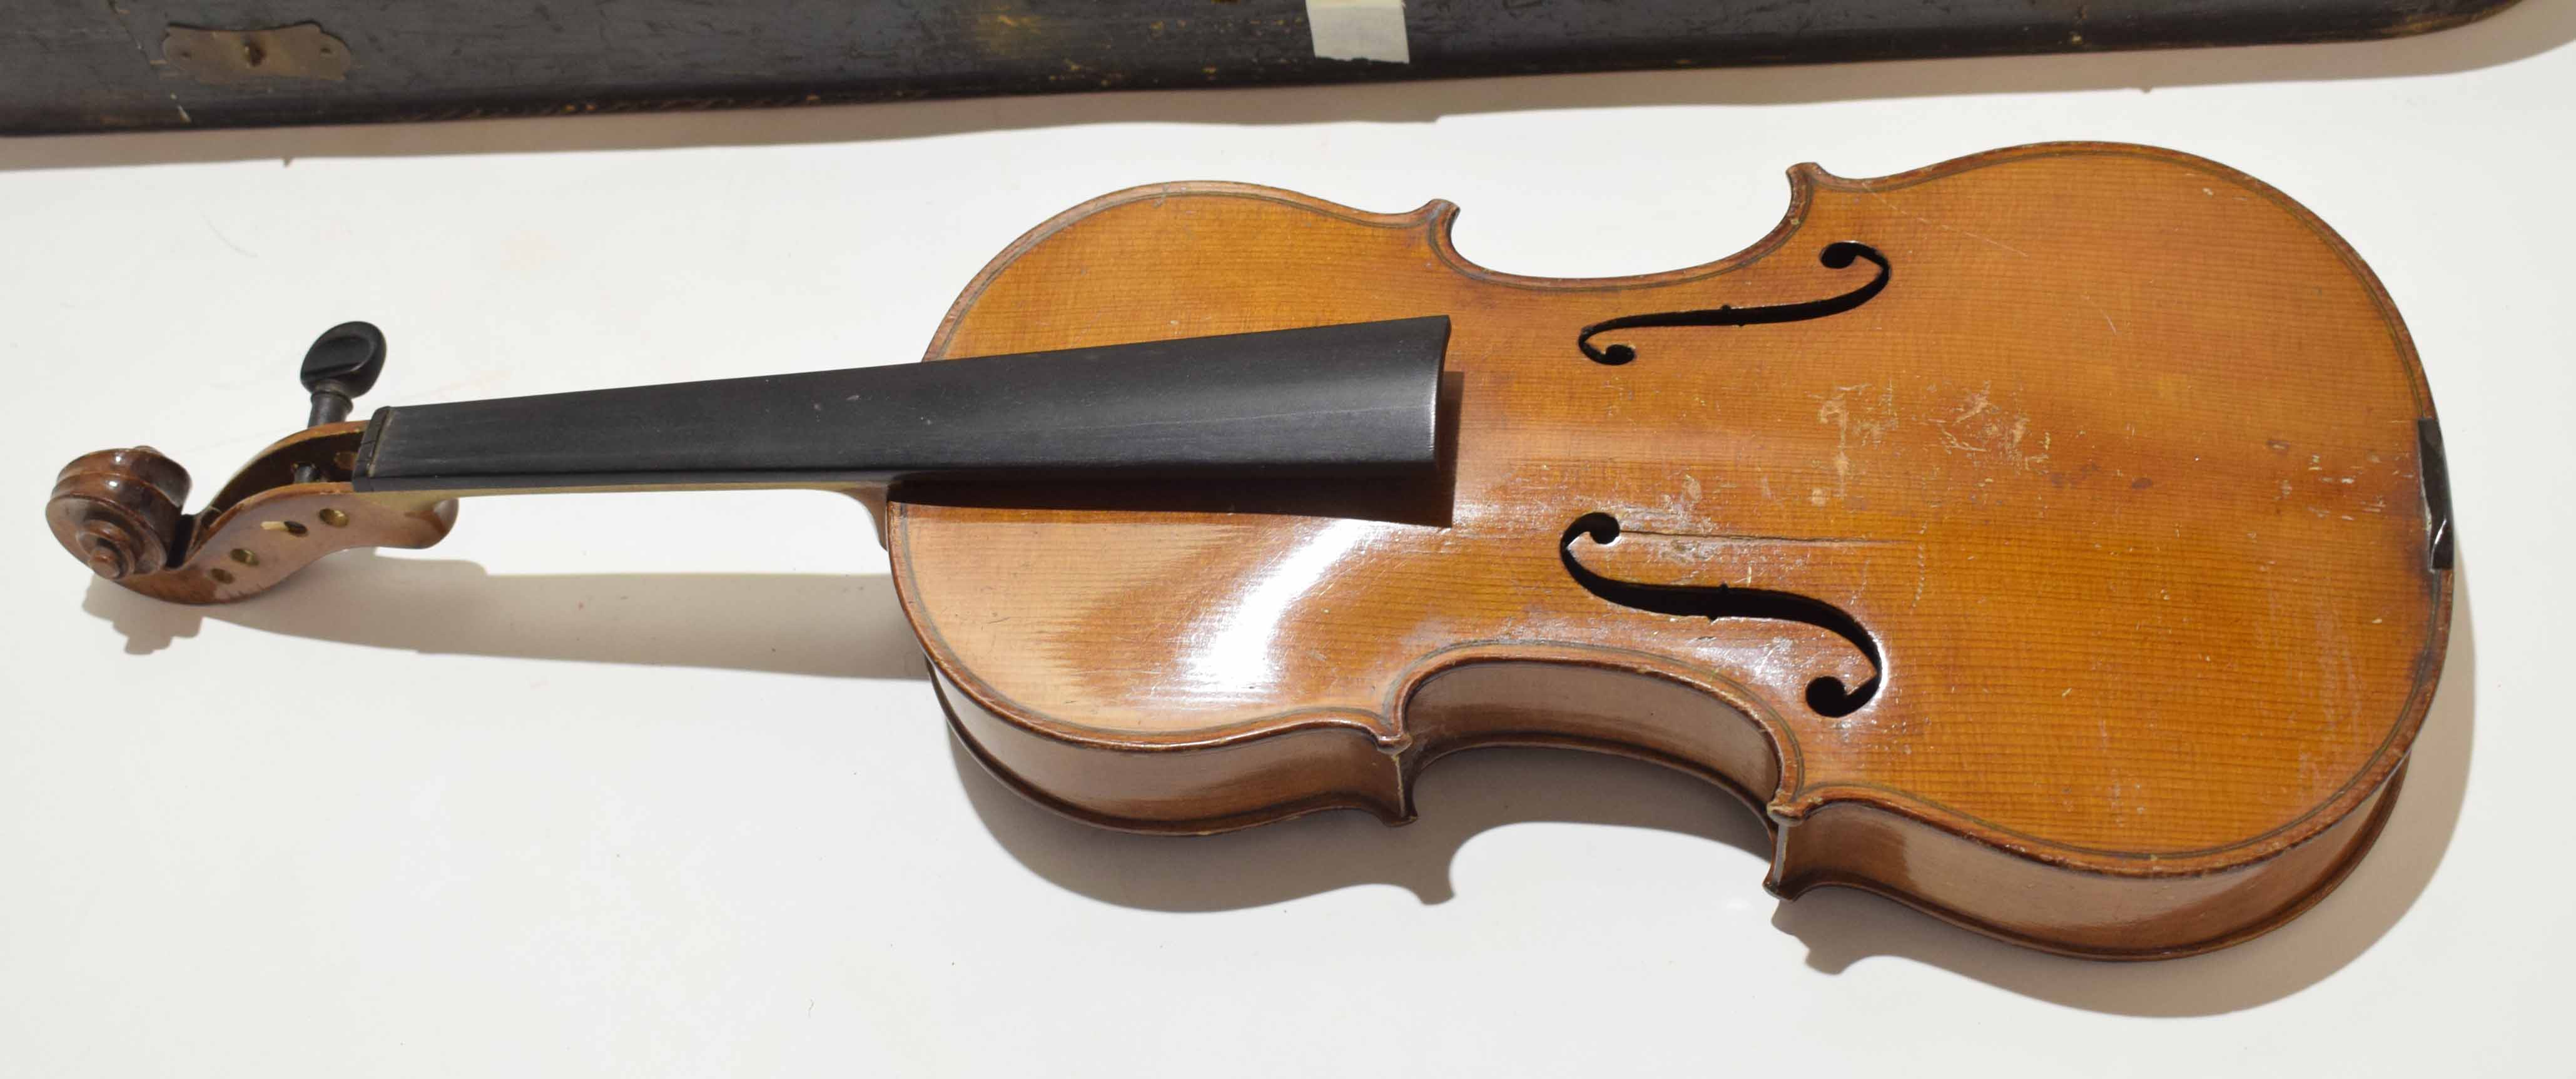 Vintage ebonised wooden cased violin and bow (lacking strings) (af) - Image 3 of 7